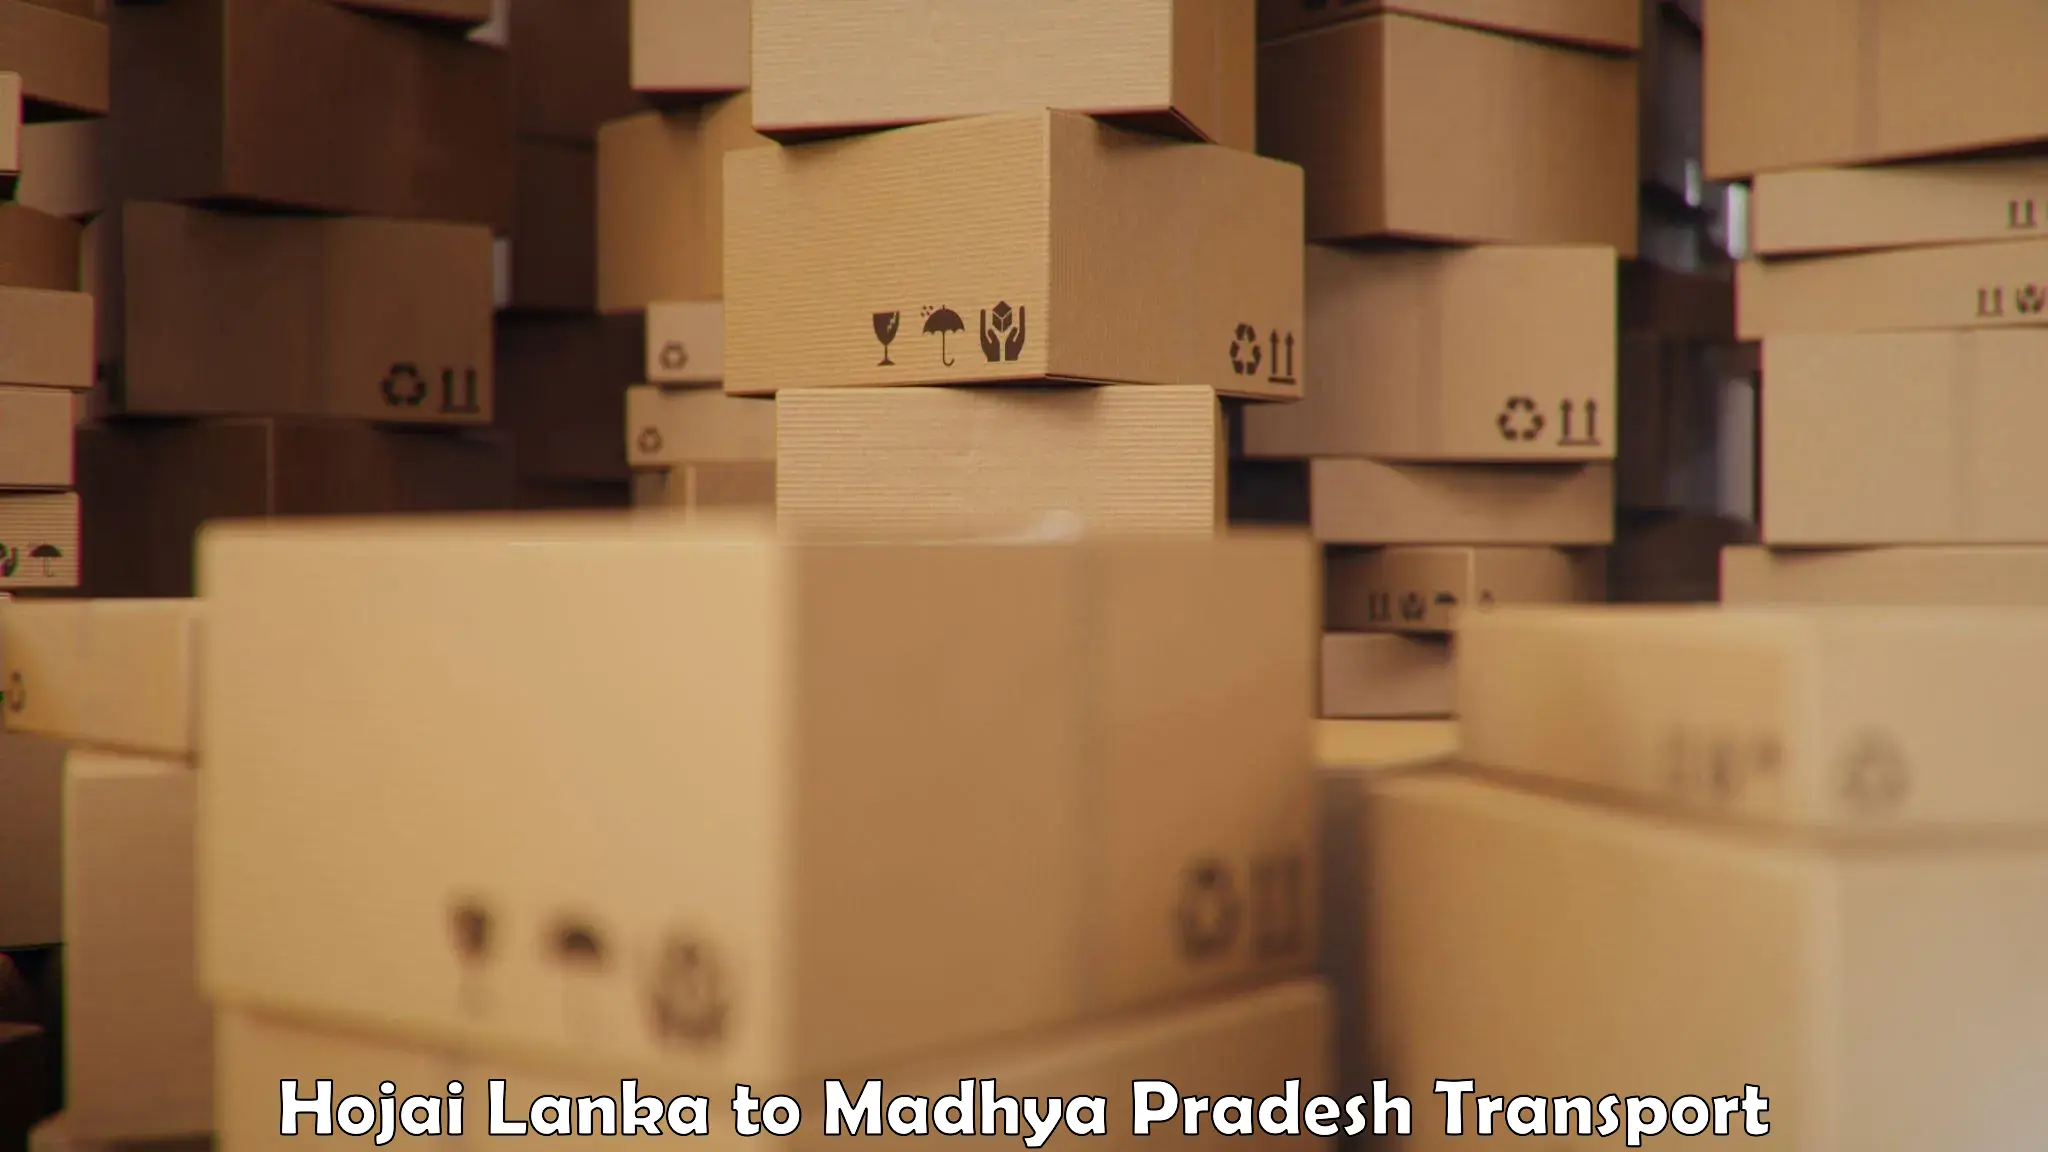 India truck logistics services Hojai Lanka to Bhind